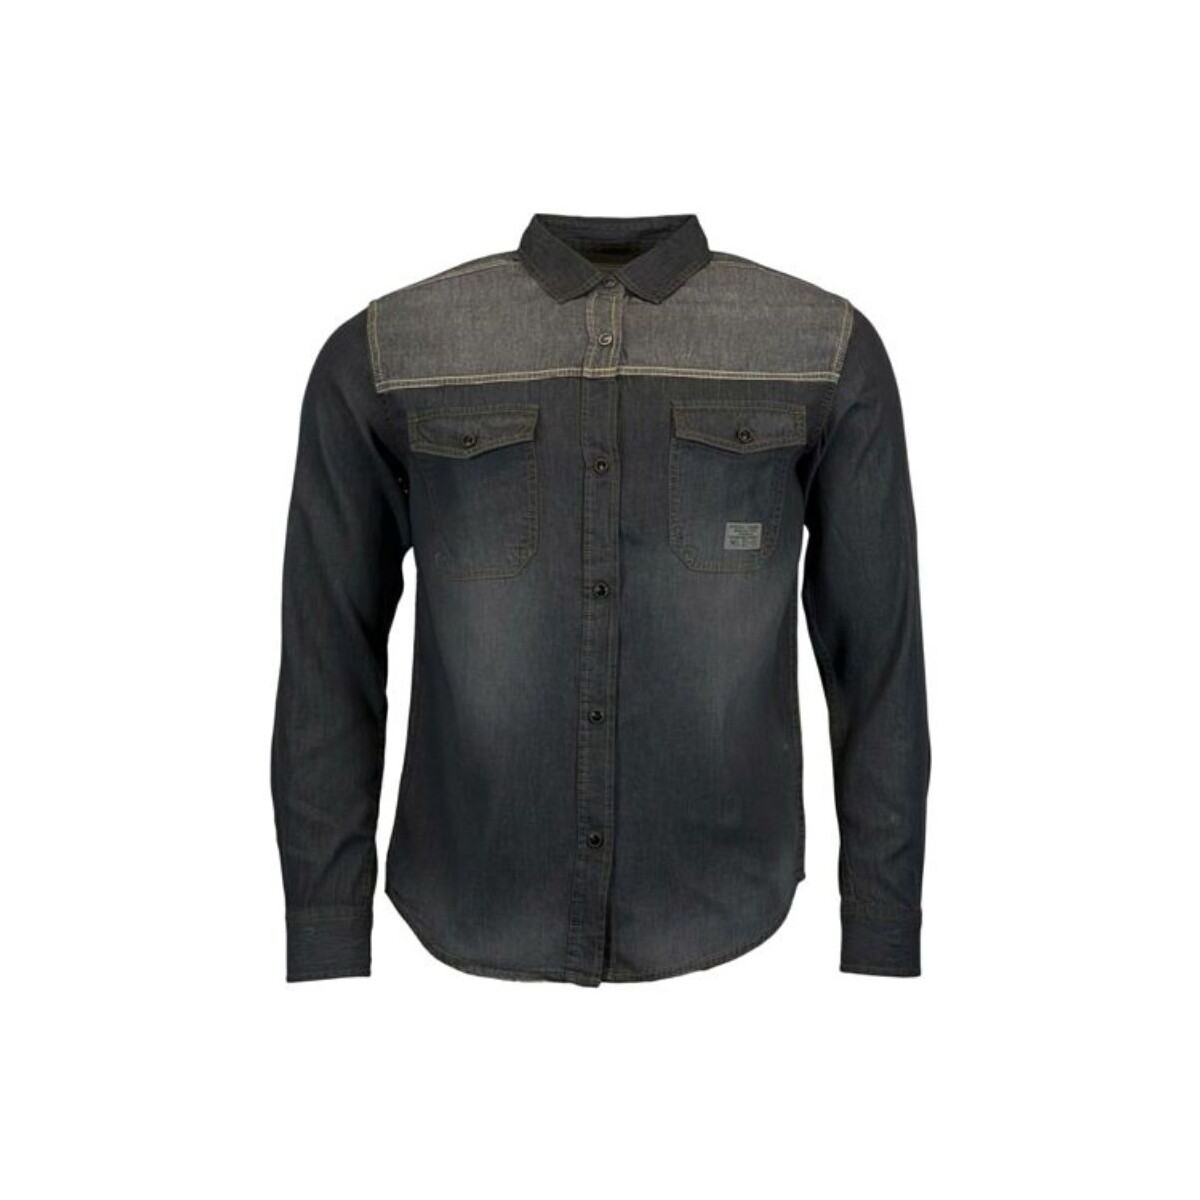 Ekw  Pánská džínová košile s dlouhým rukávem Feiler černo-šedá  Černá